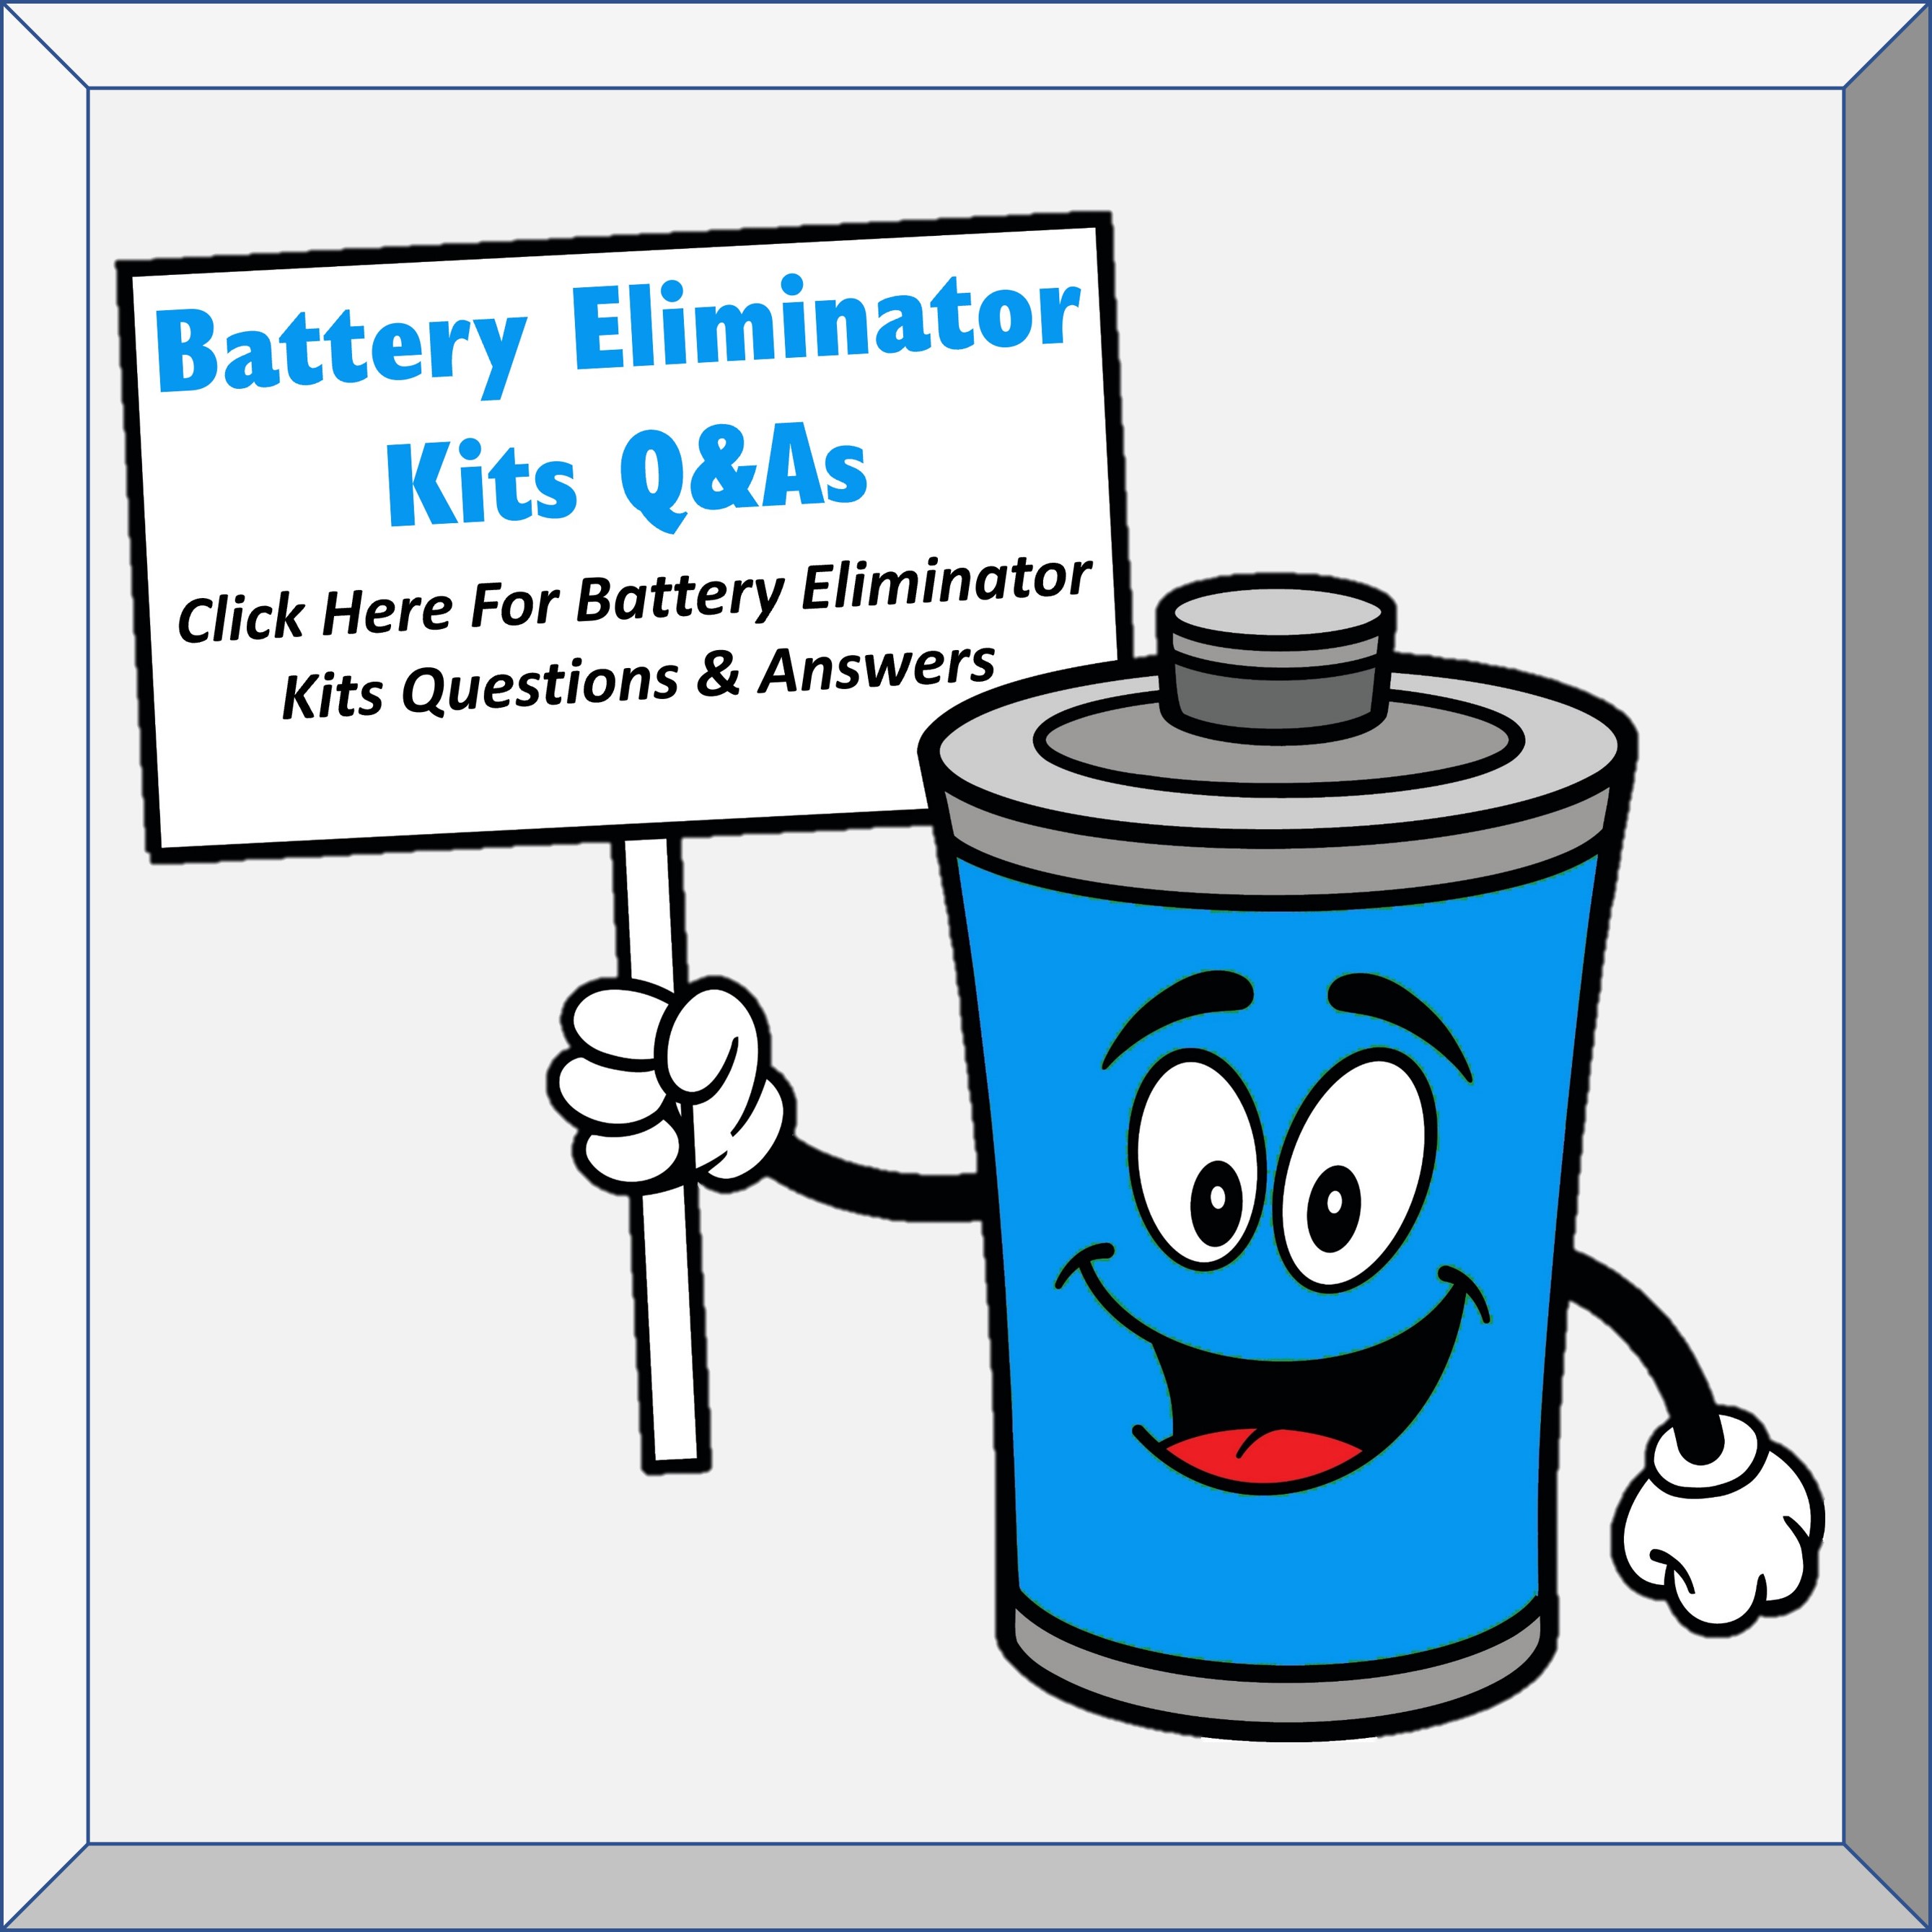 Battery Eliminator Kits Q&As